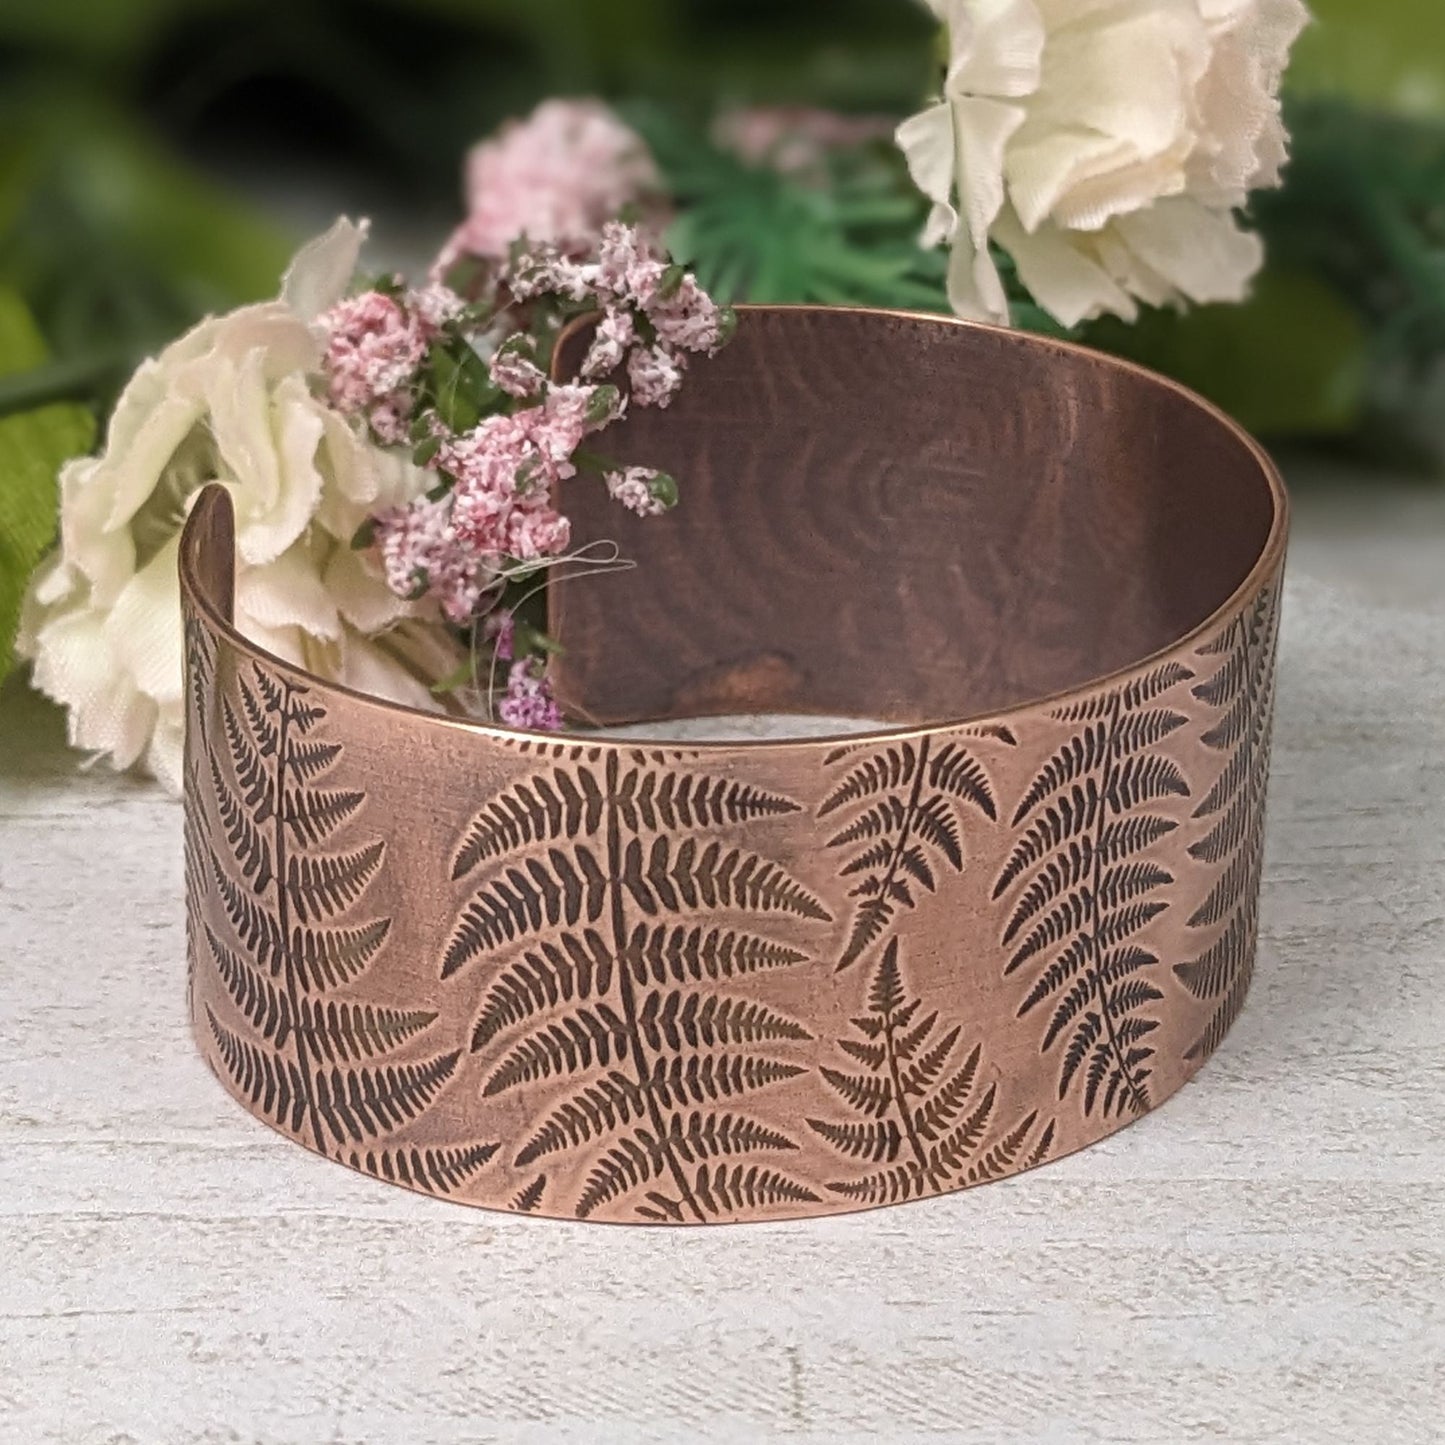 copper cuff bracelet covered in  impressions of fern fronds.